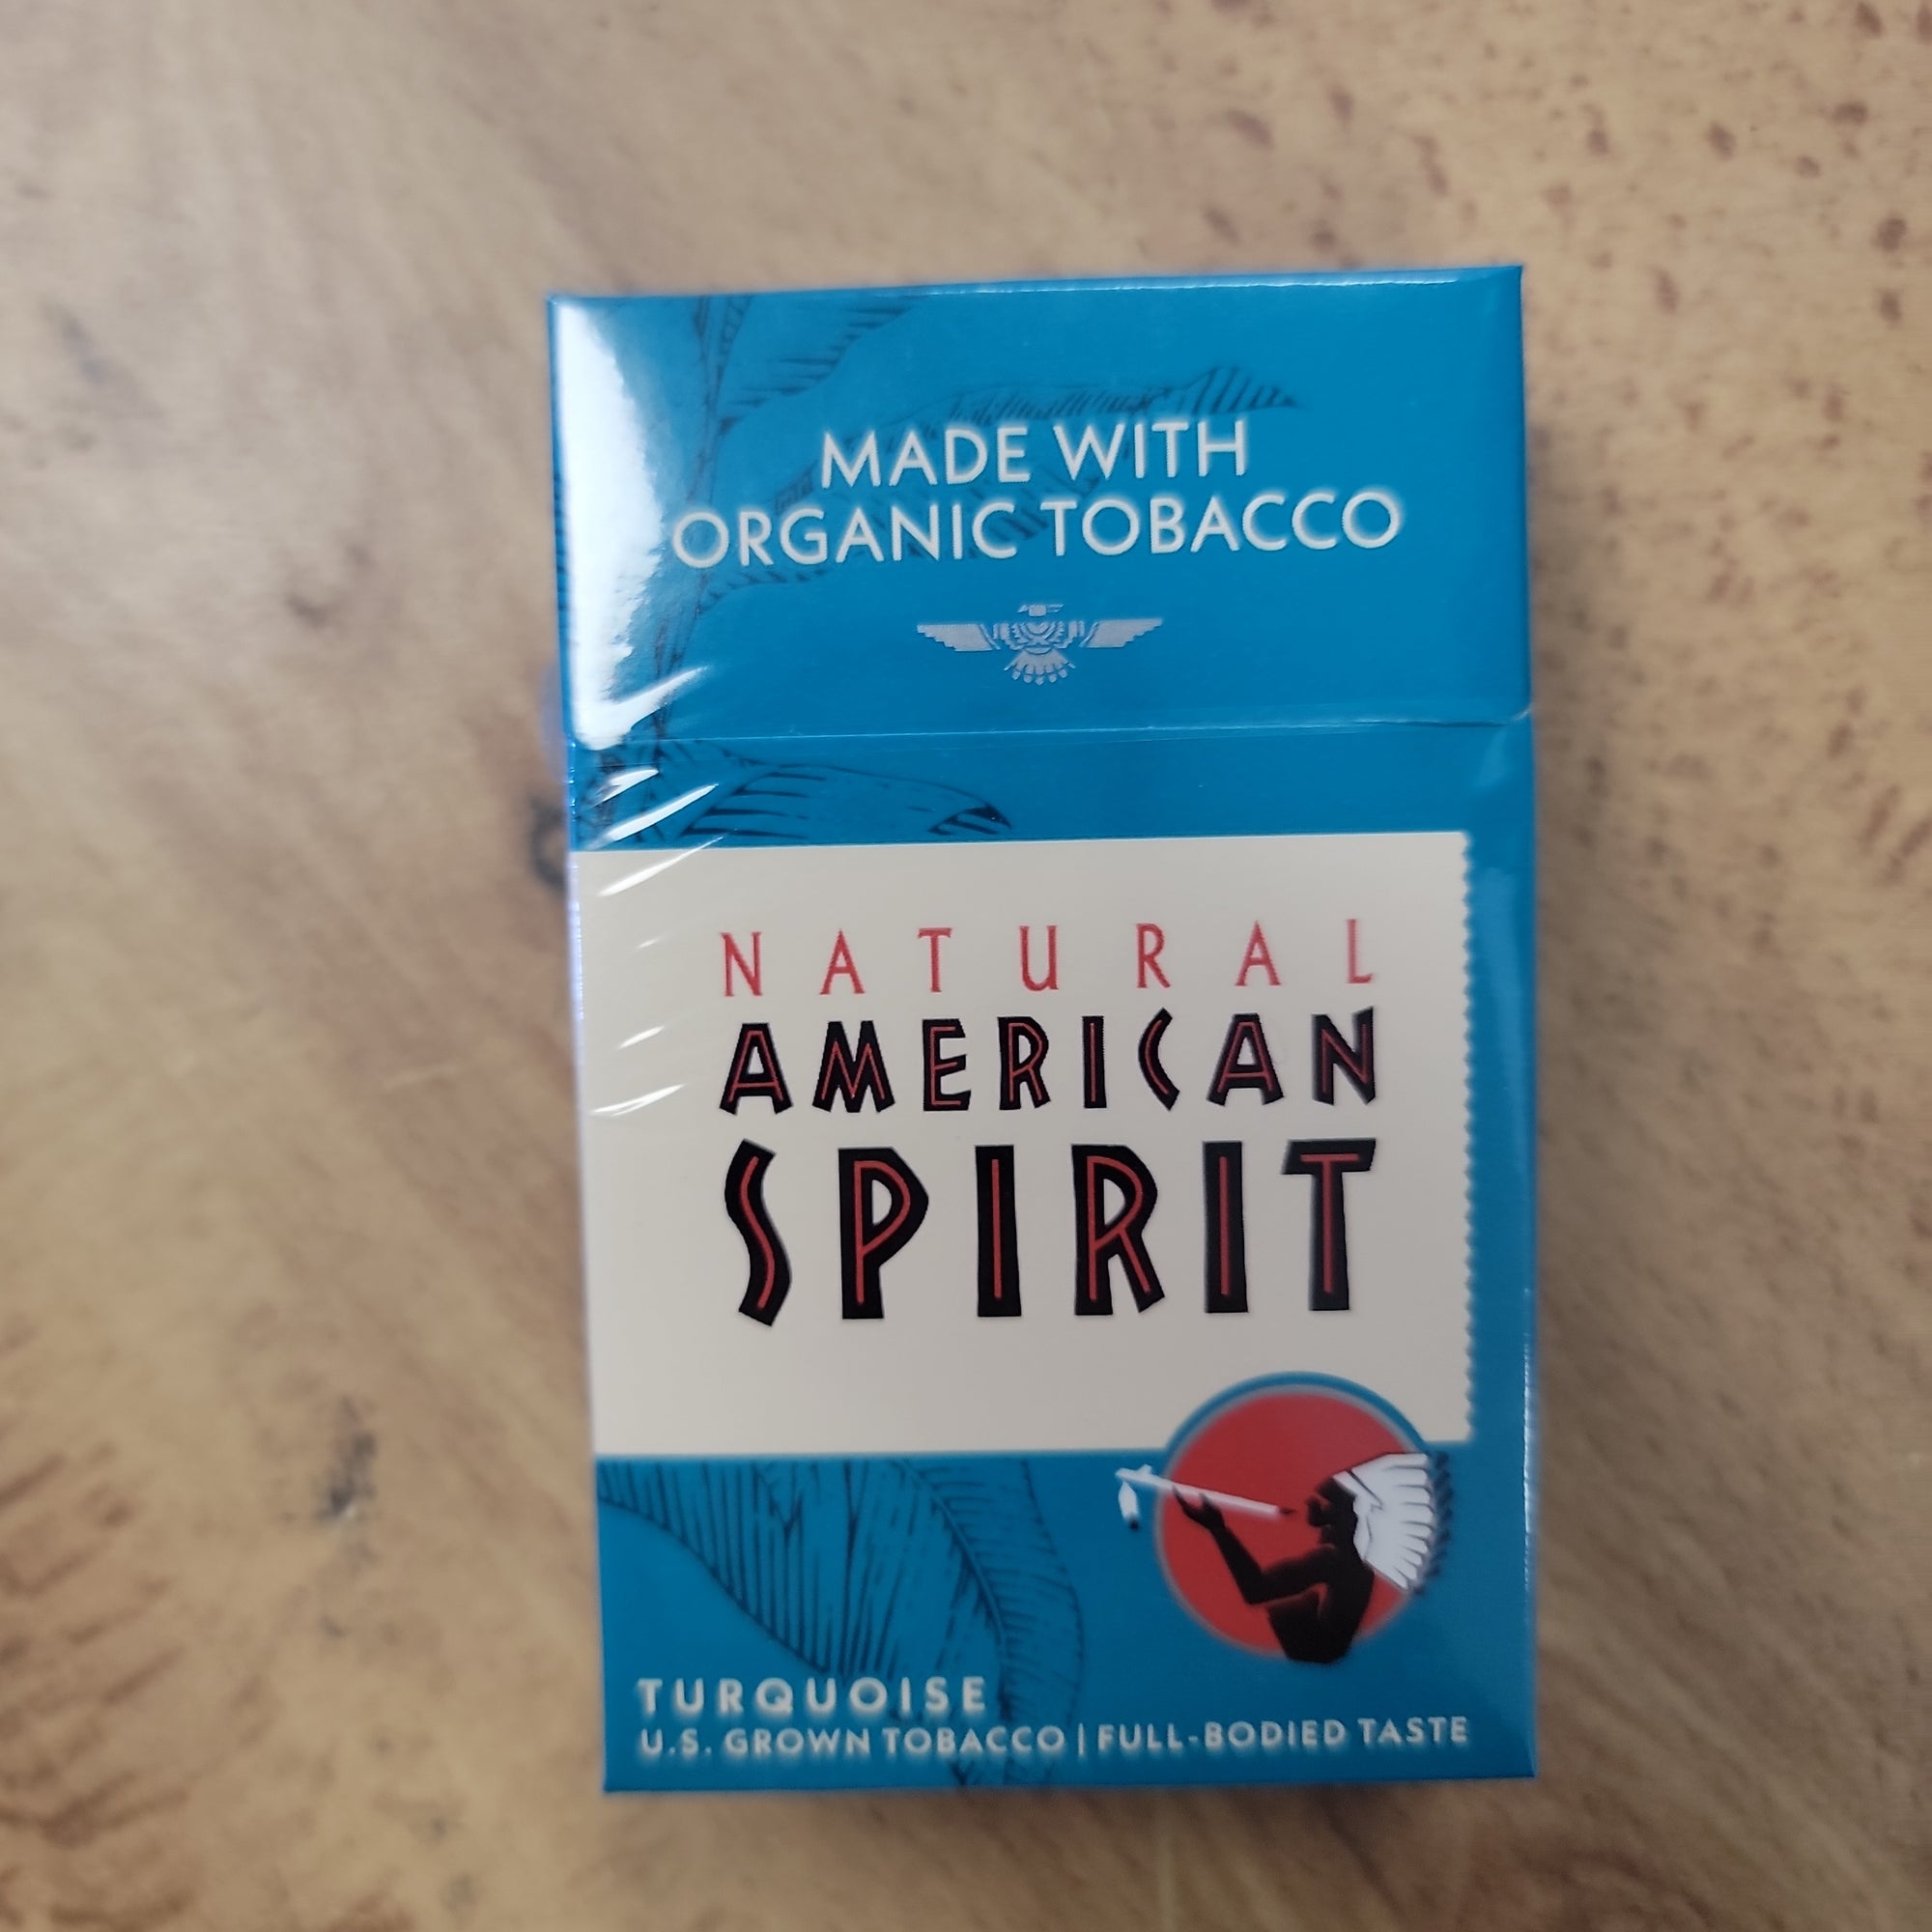 American spirit Turquoise